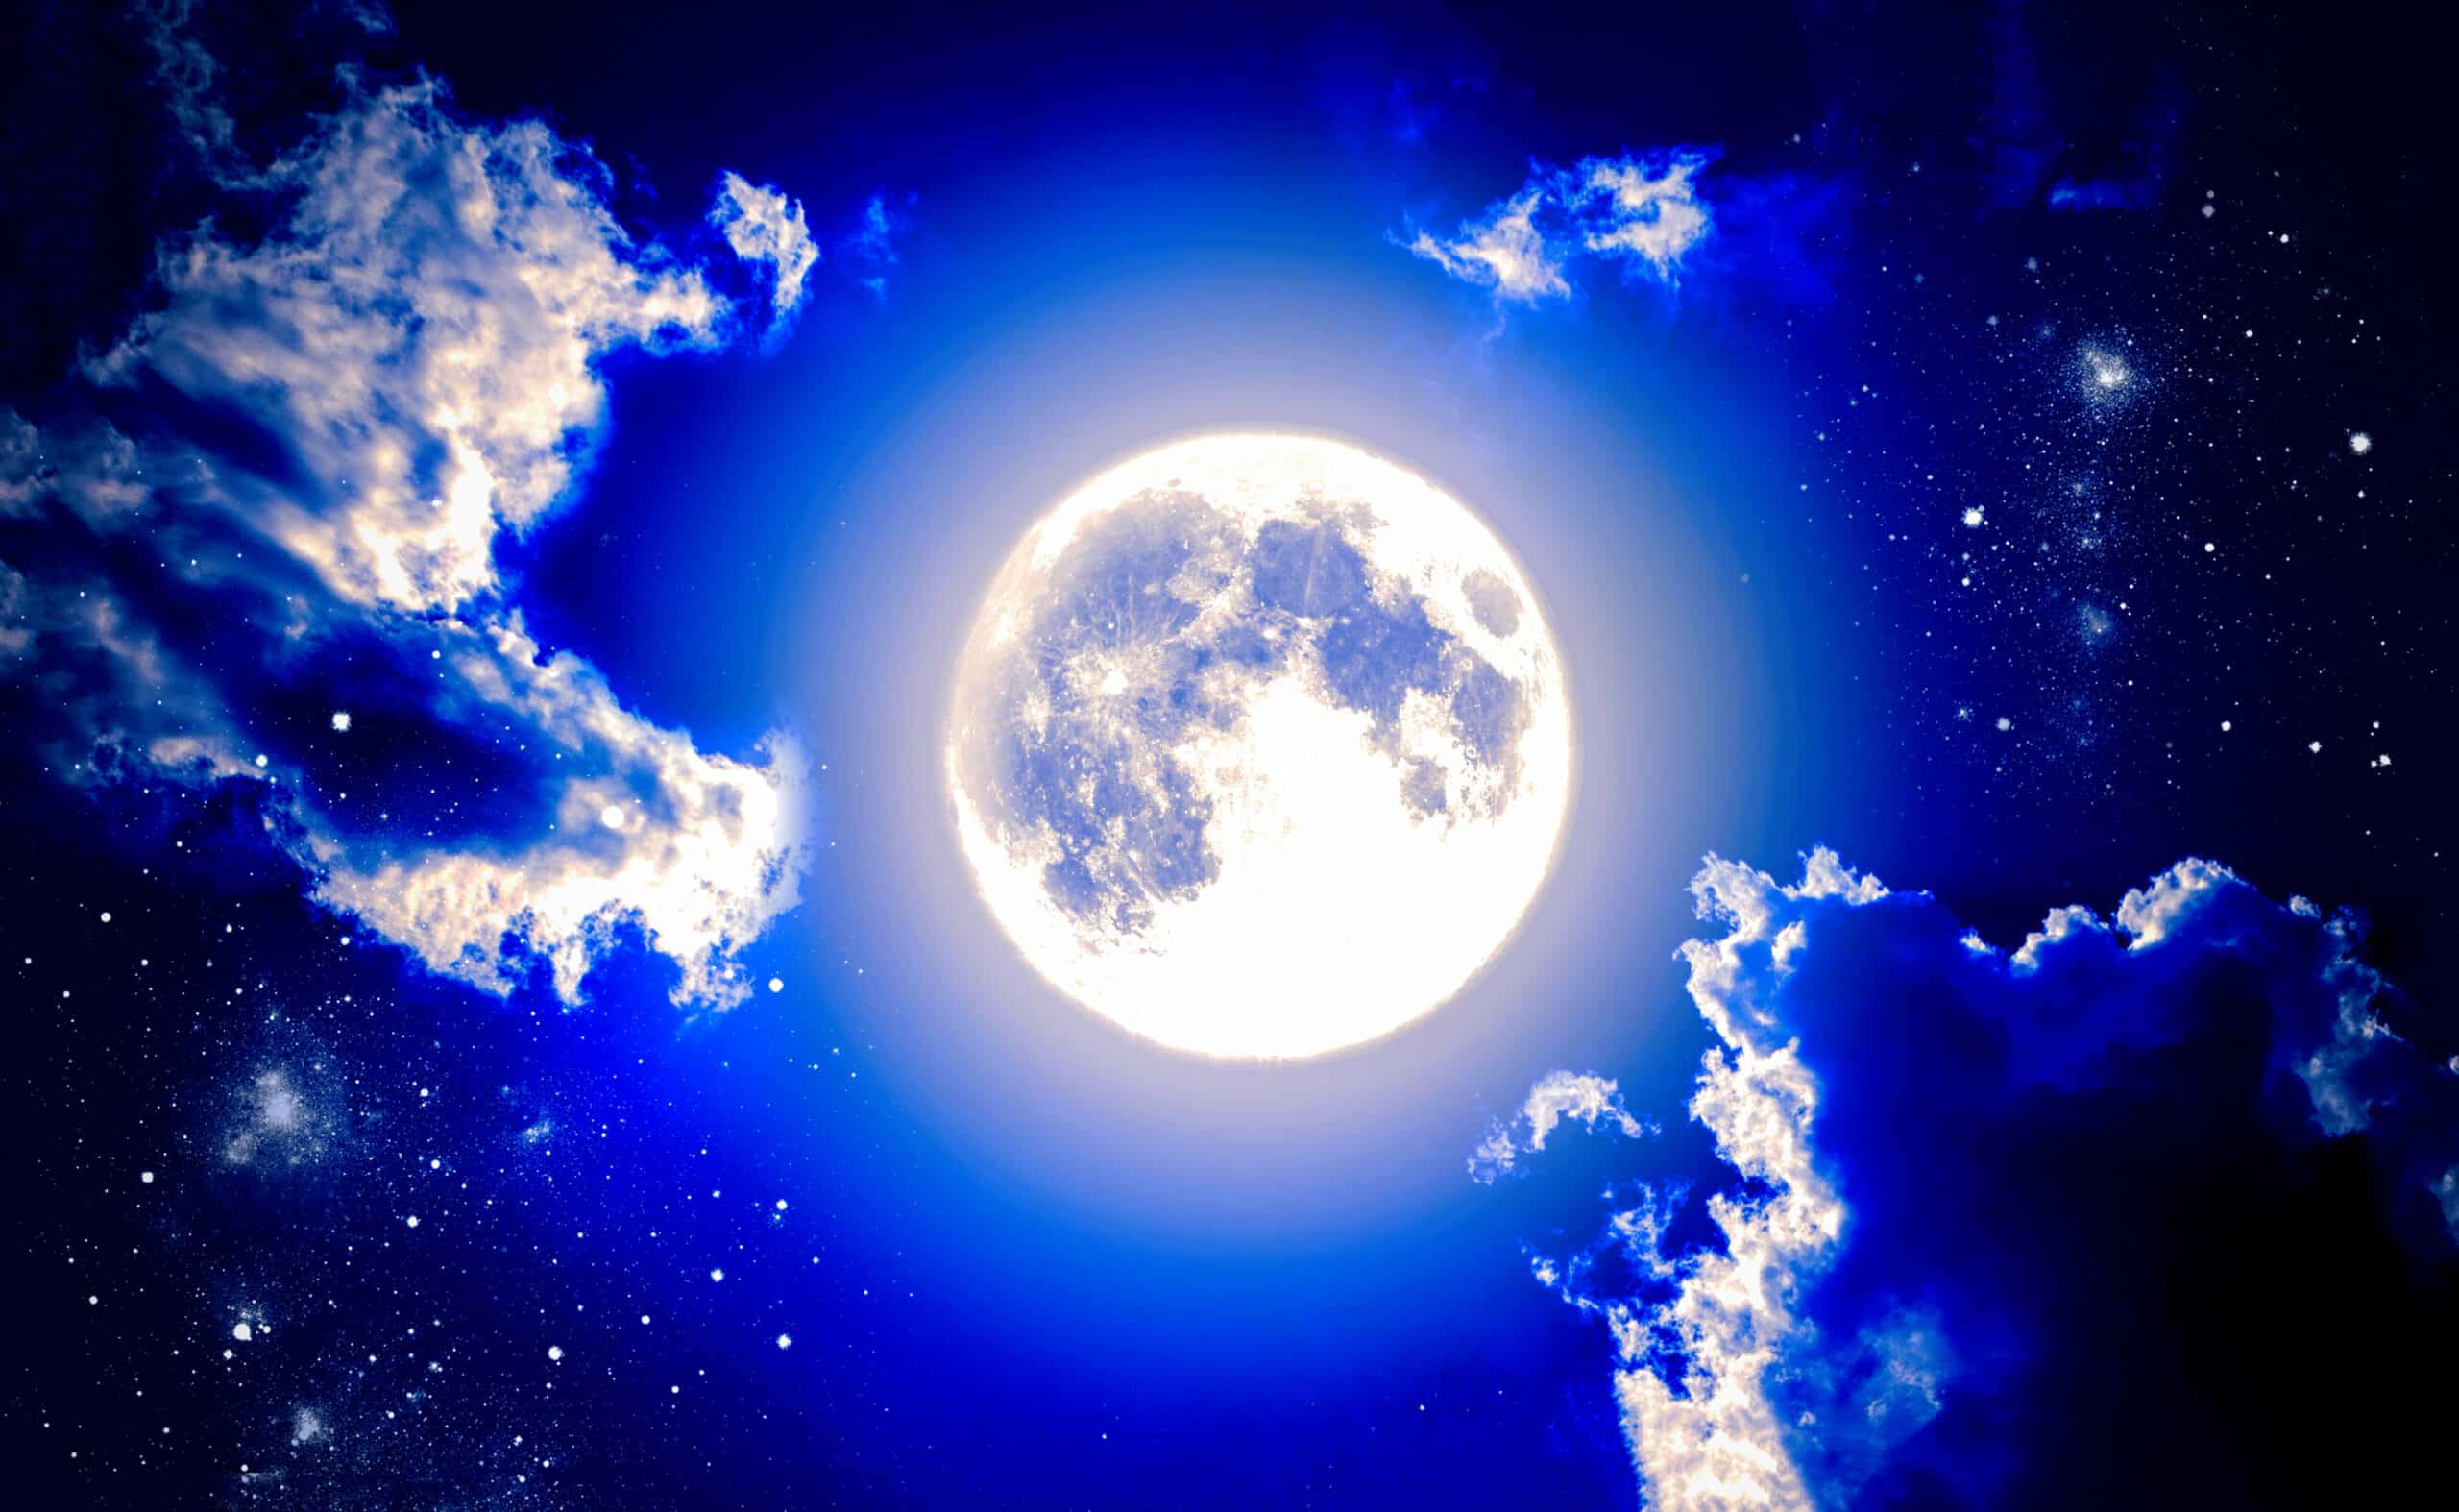 Emotionally Intense November Full Moon Will Finally Turn Your Dreams Into Reality